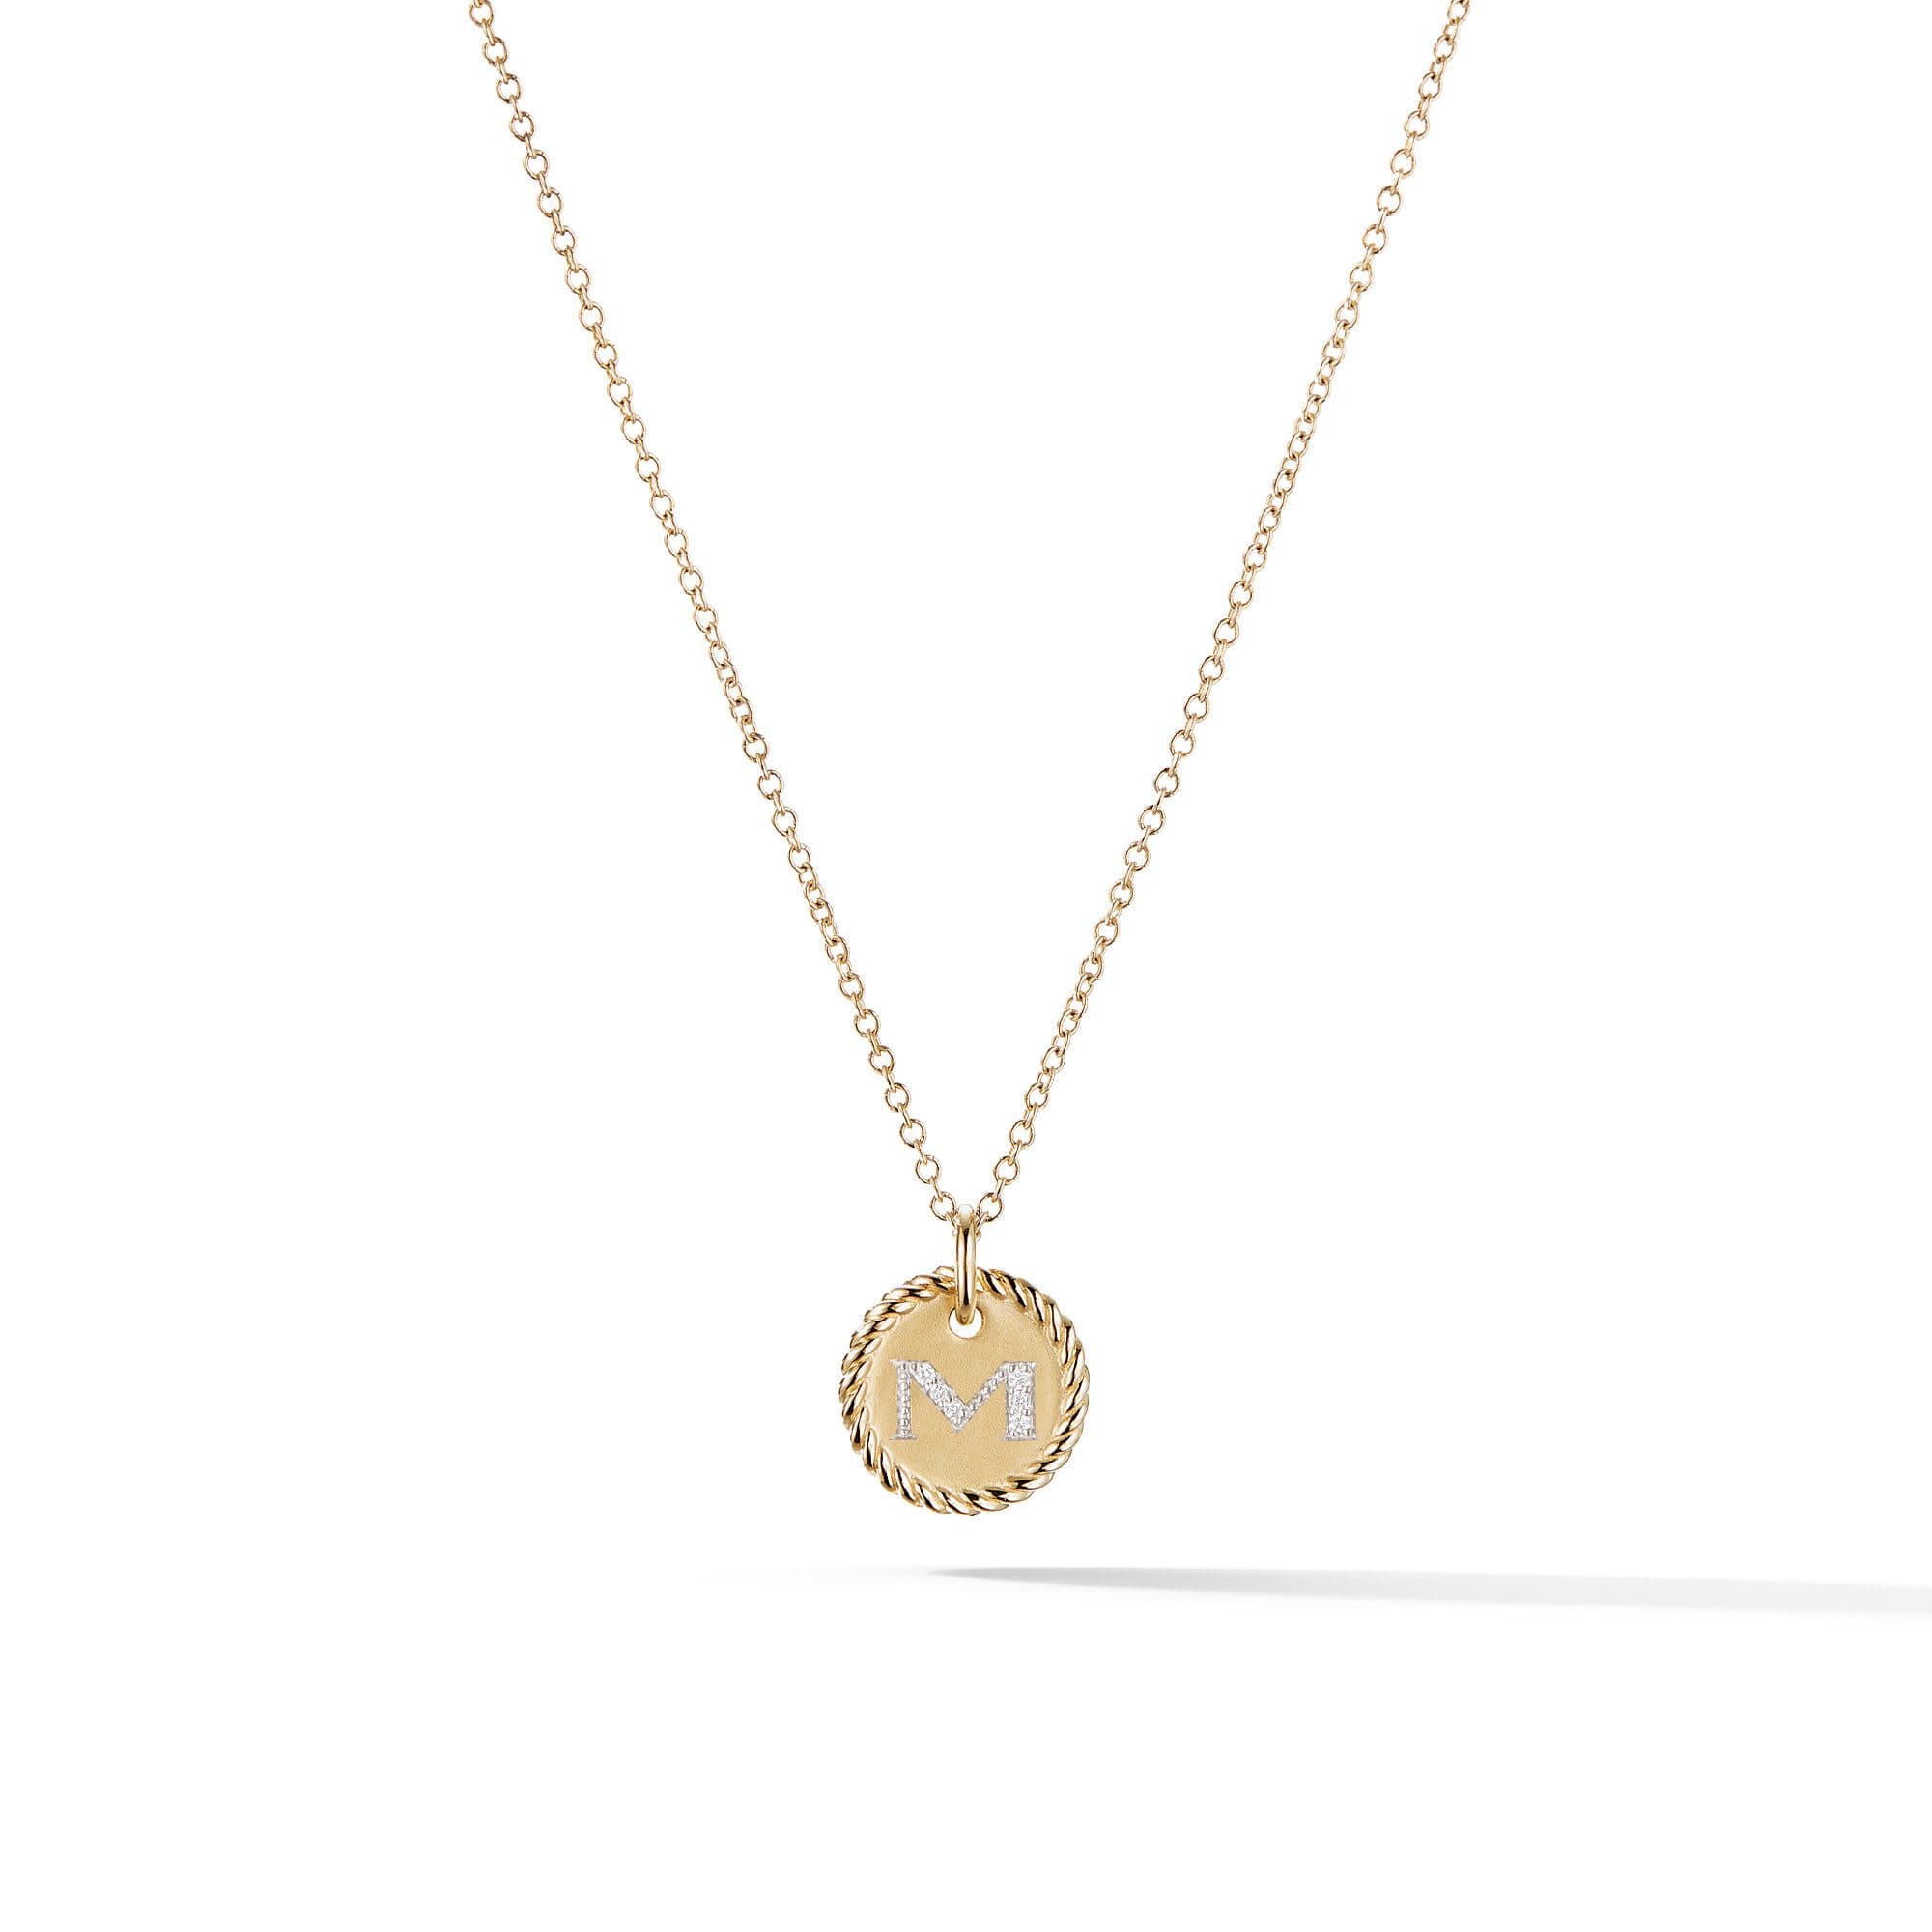 David Yurman M Initial Charm Necklace in 18k Yellow Gold with Diamonds